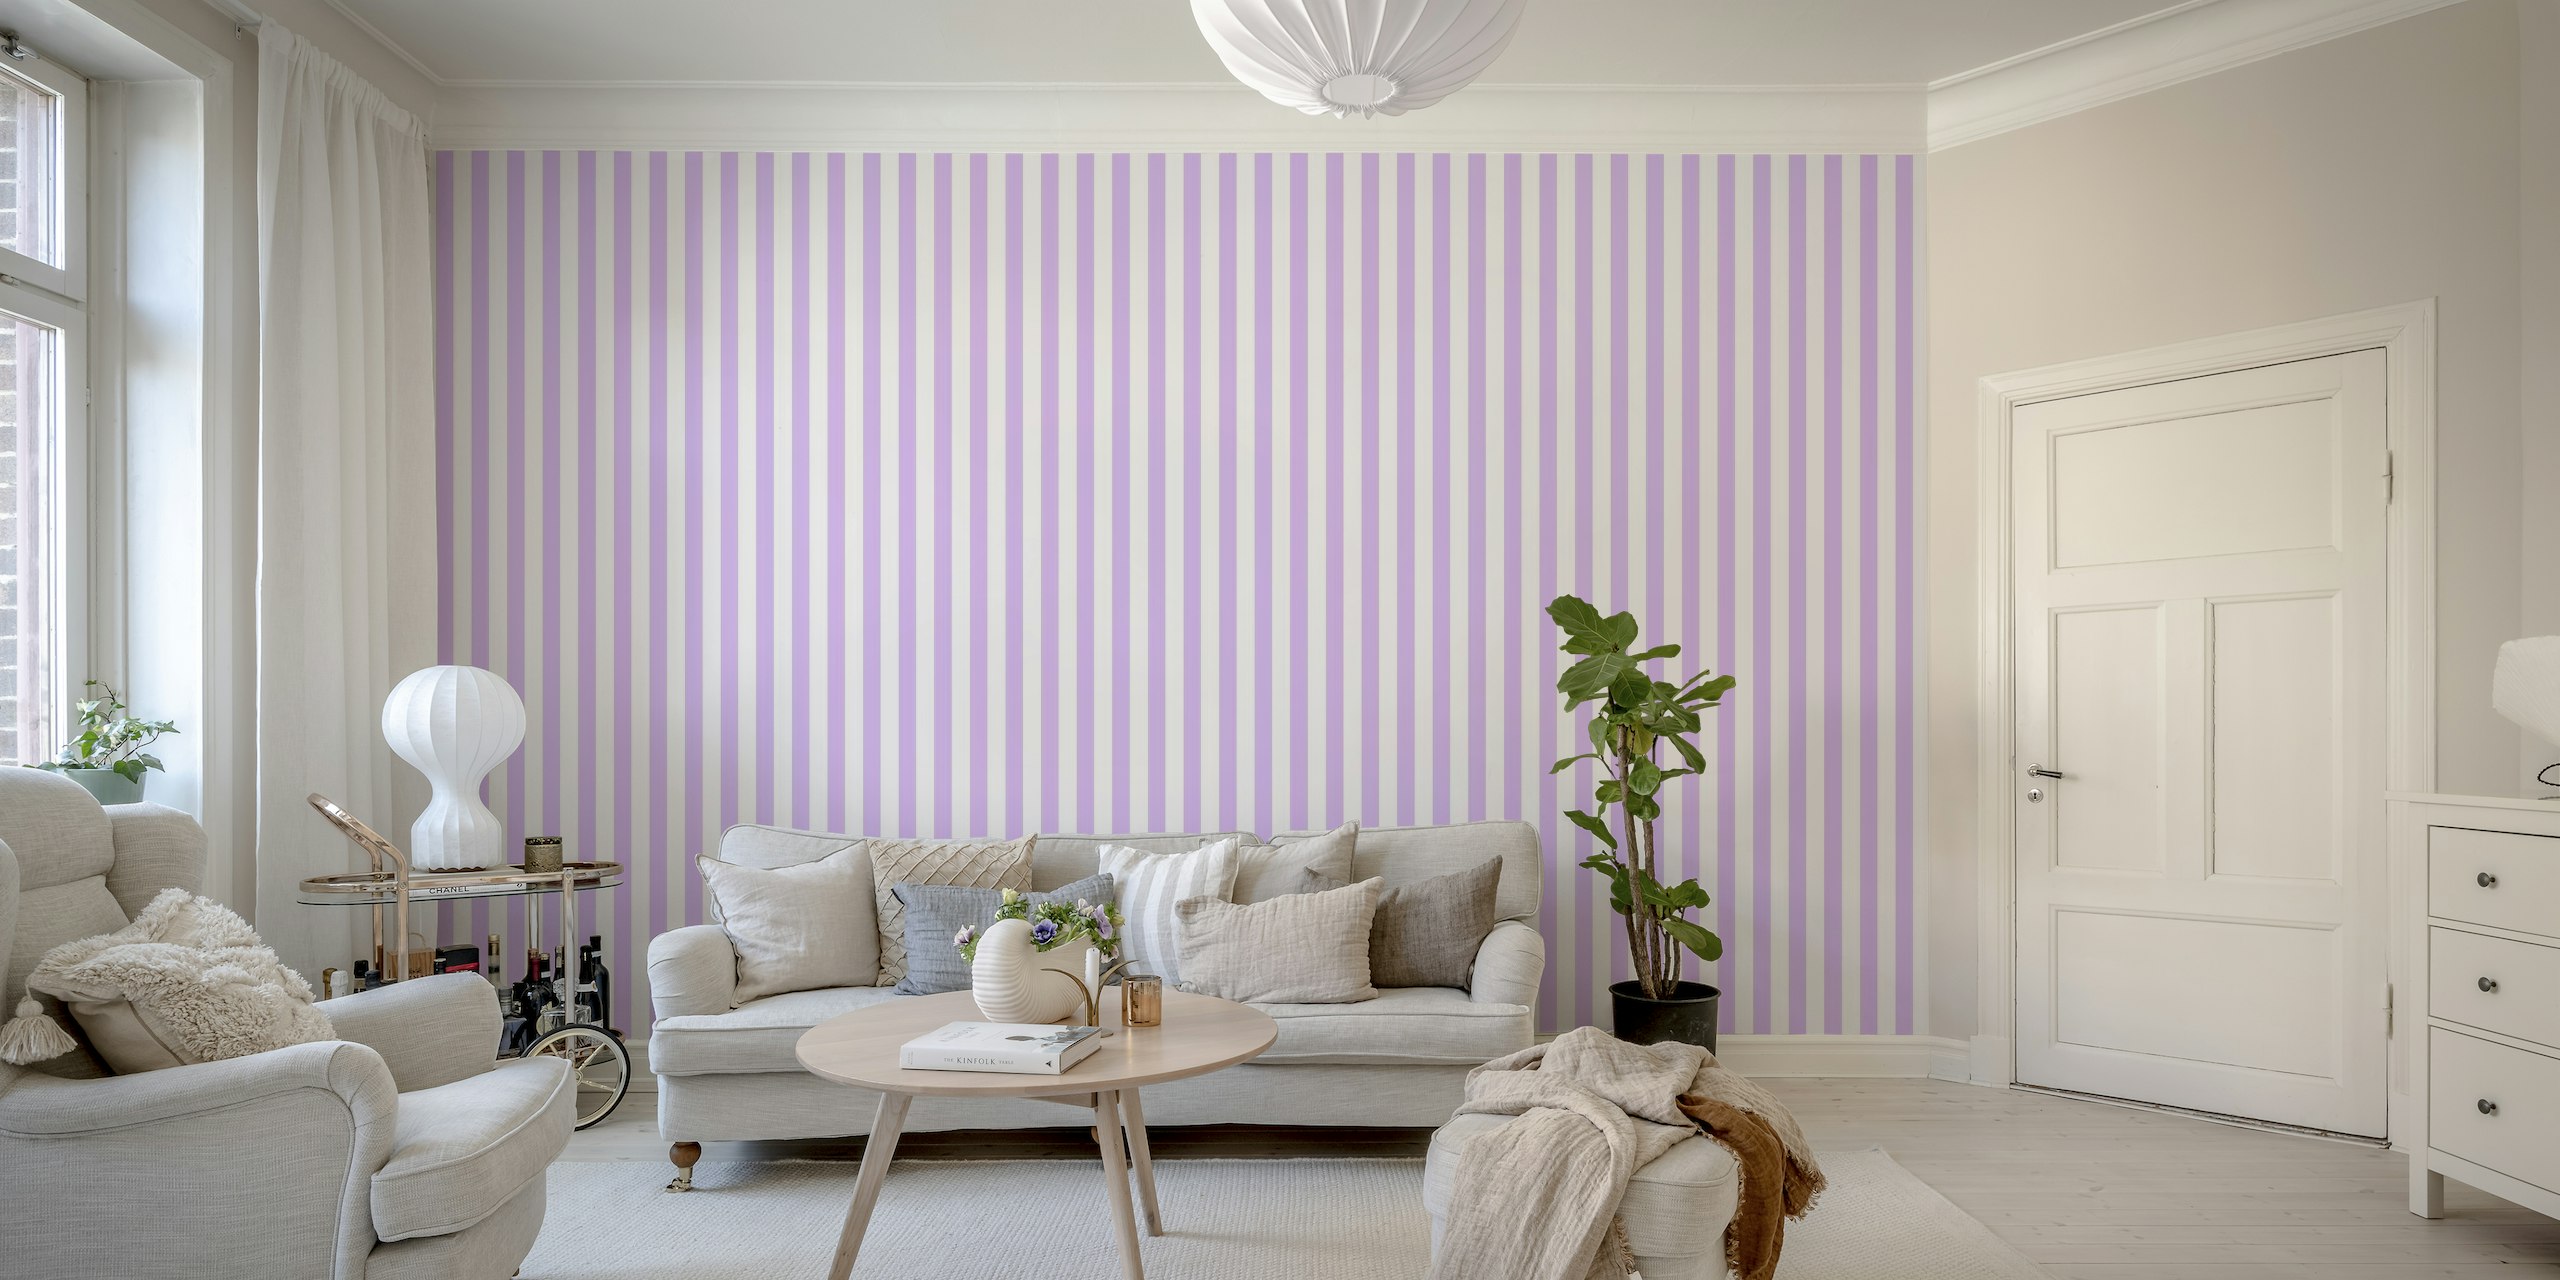 Lilac and white stripes papel pintado